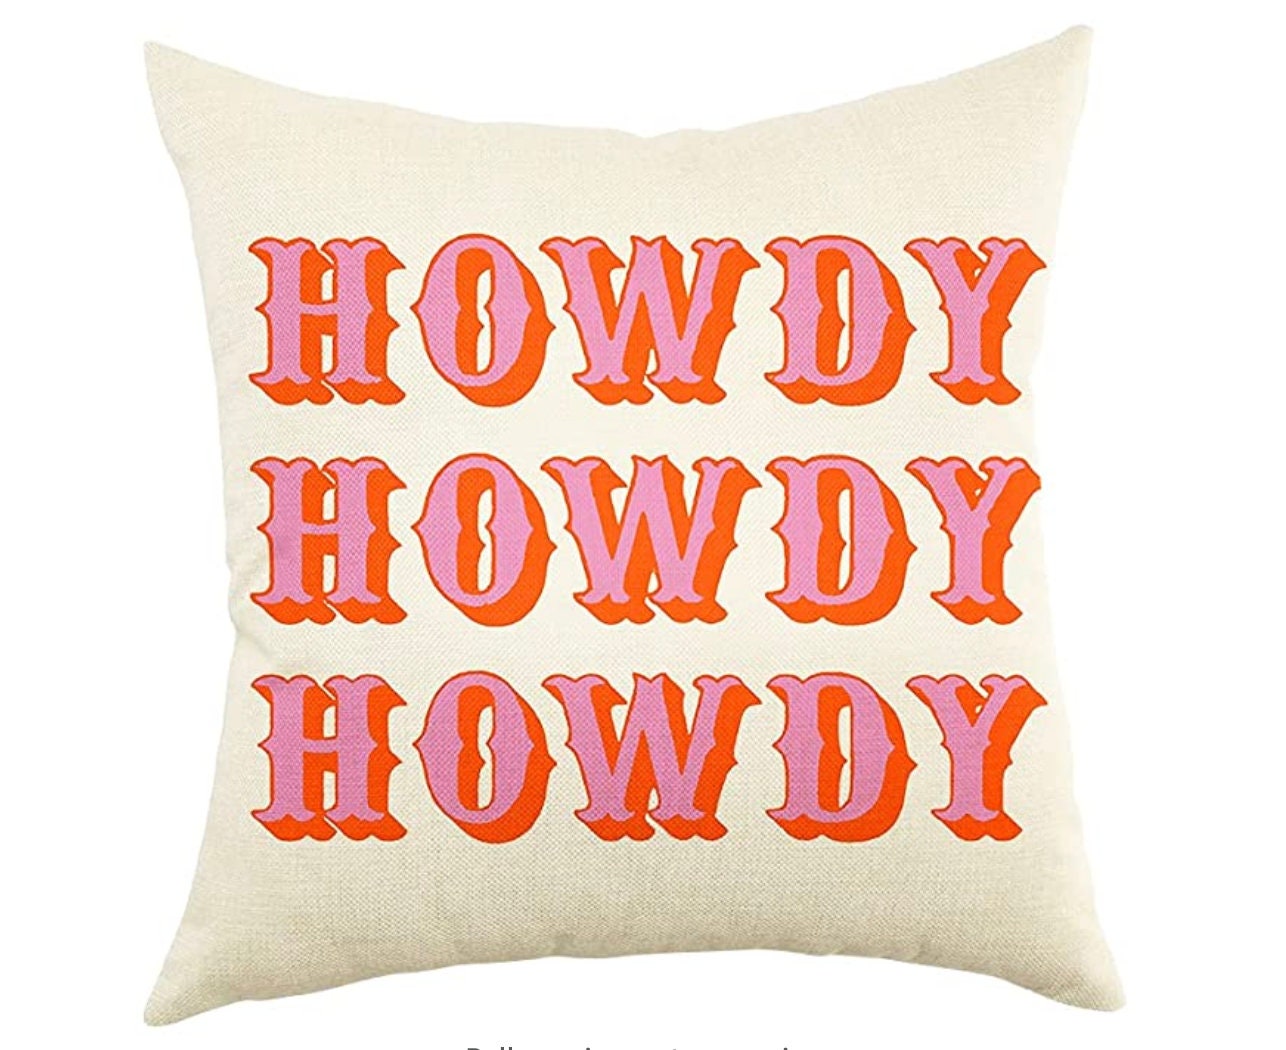 The Howdy Pillowcase